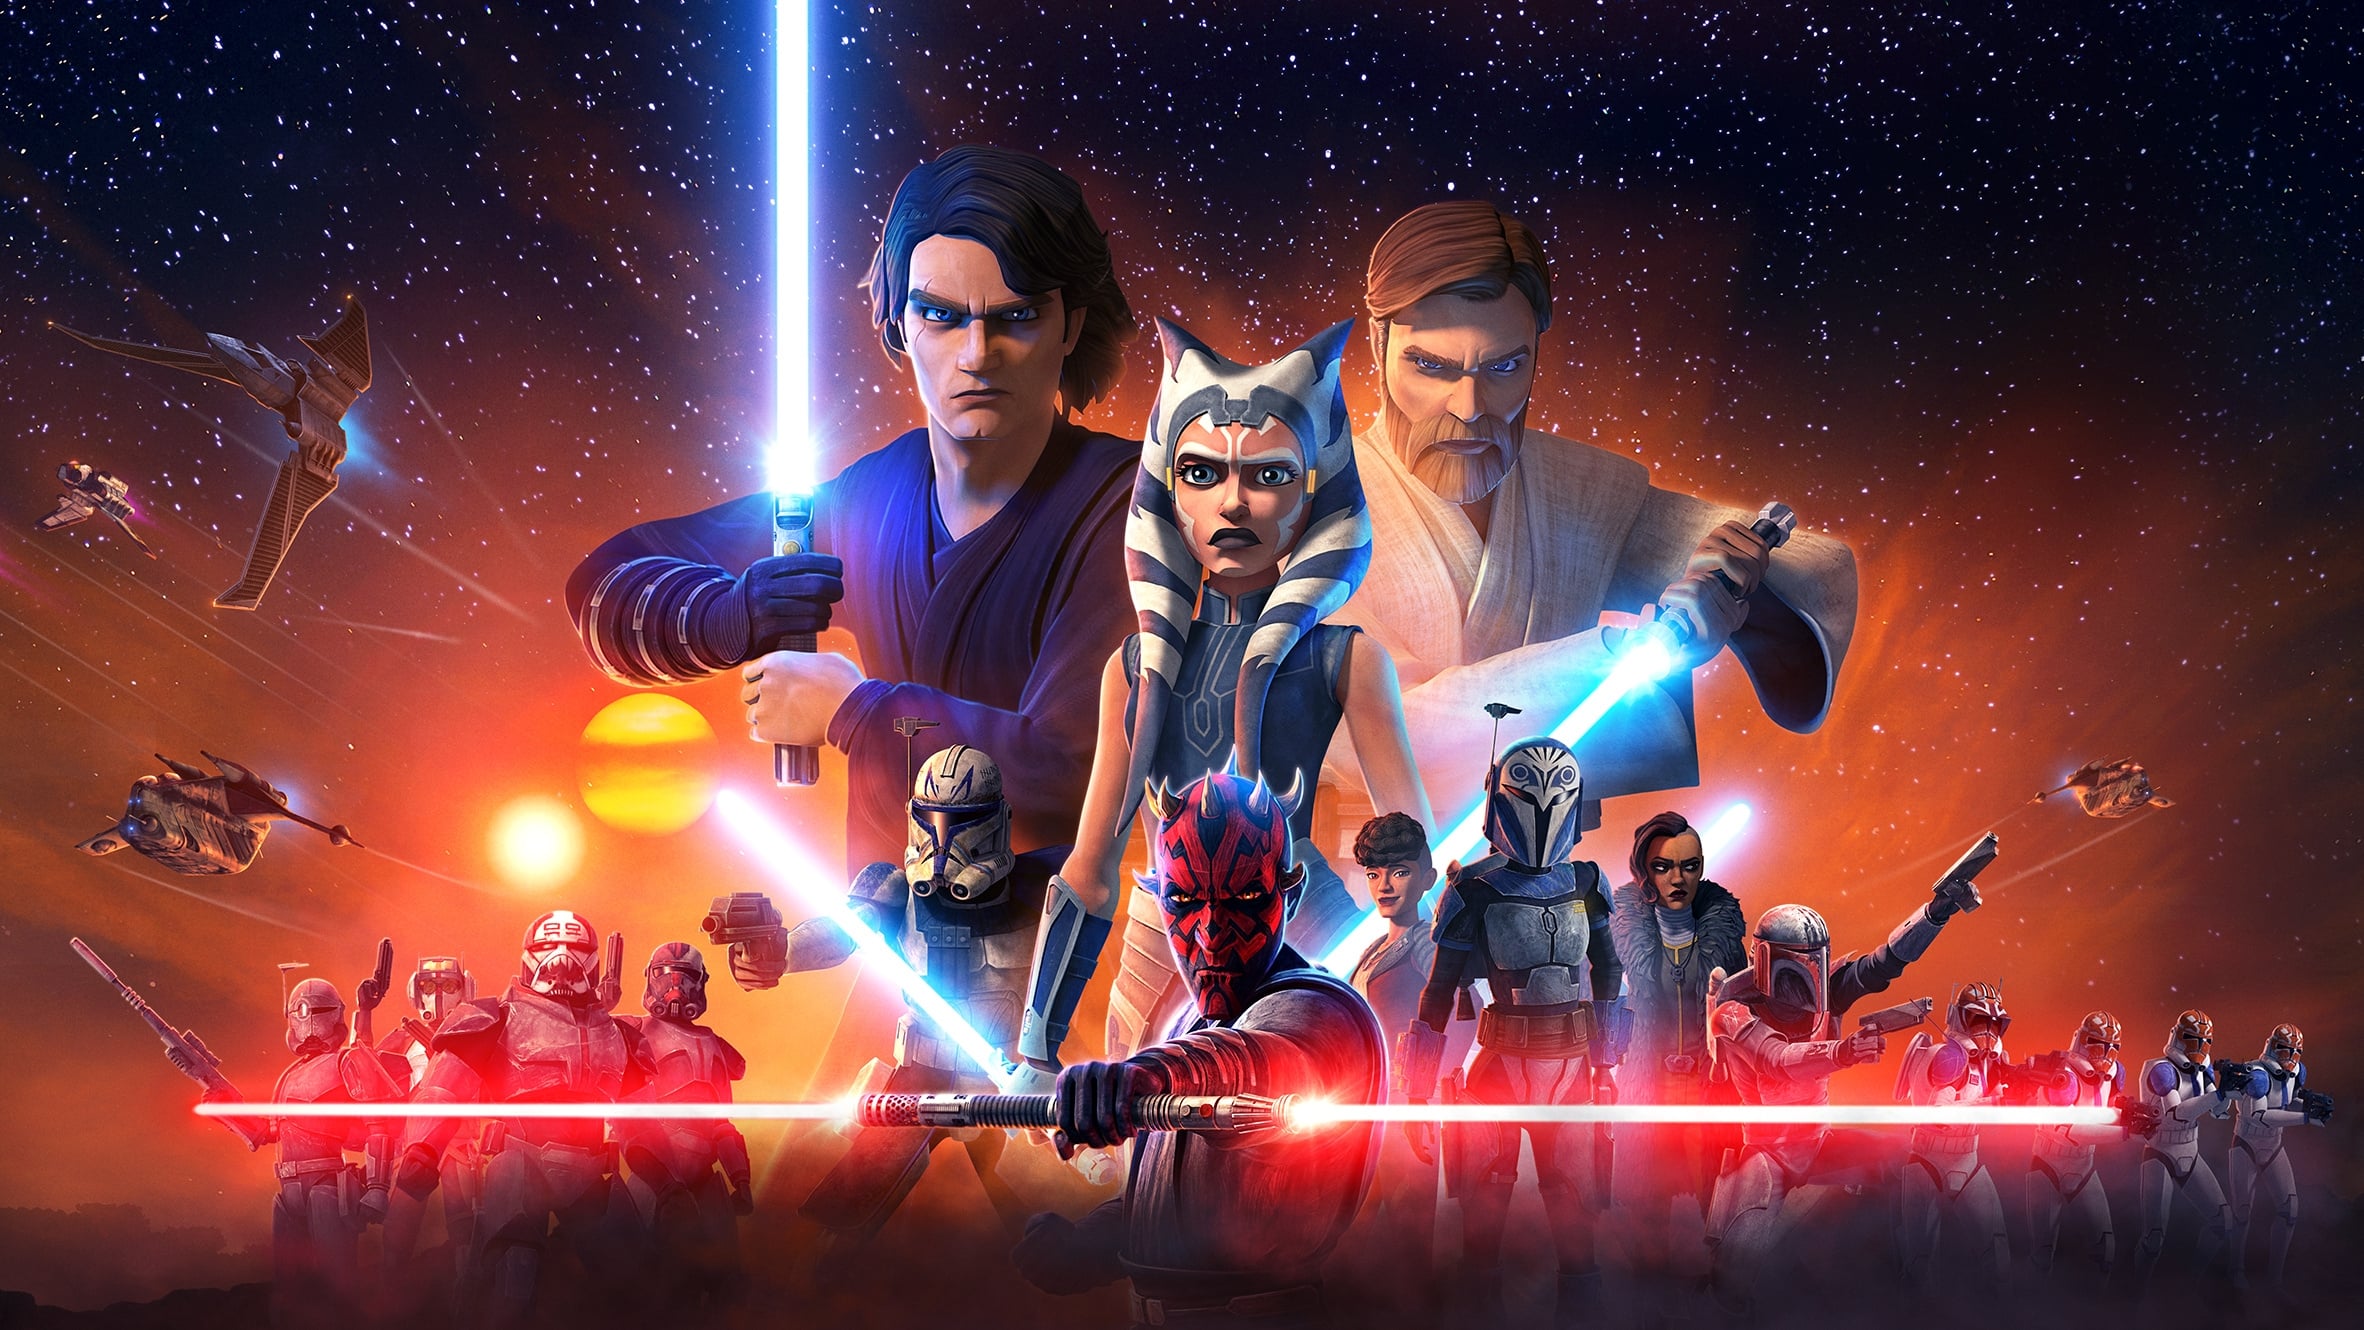 Star Wars Razboiul Clonelor Sezonul 1 Dublat In Romana Assistir Star Wars: A Guerra dos Clones Online – Tem Séries Online